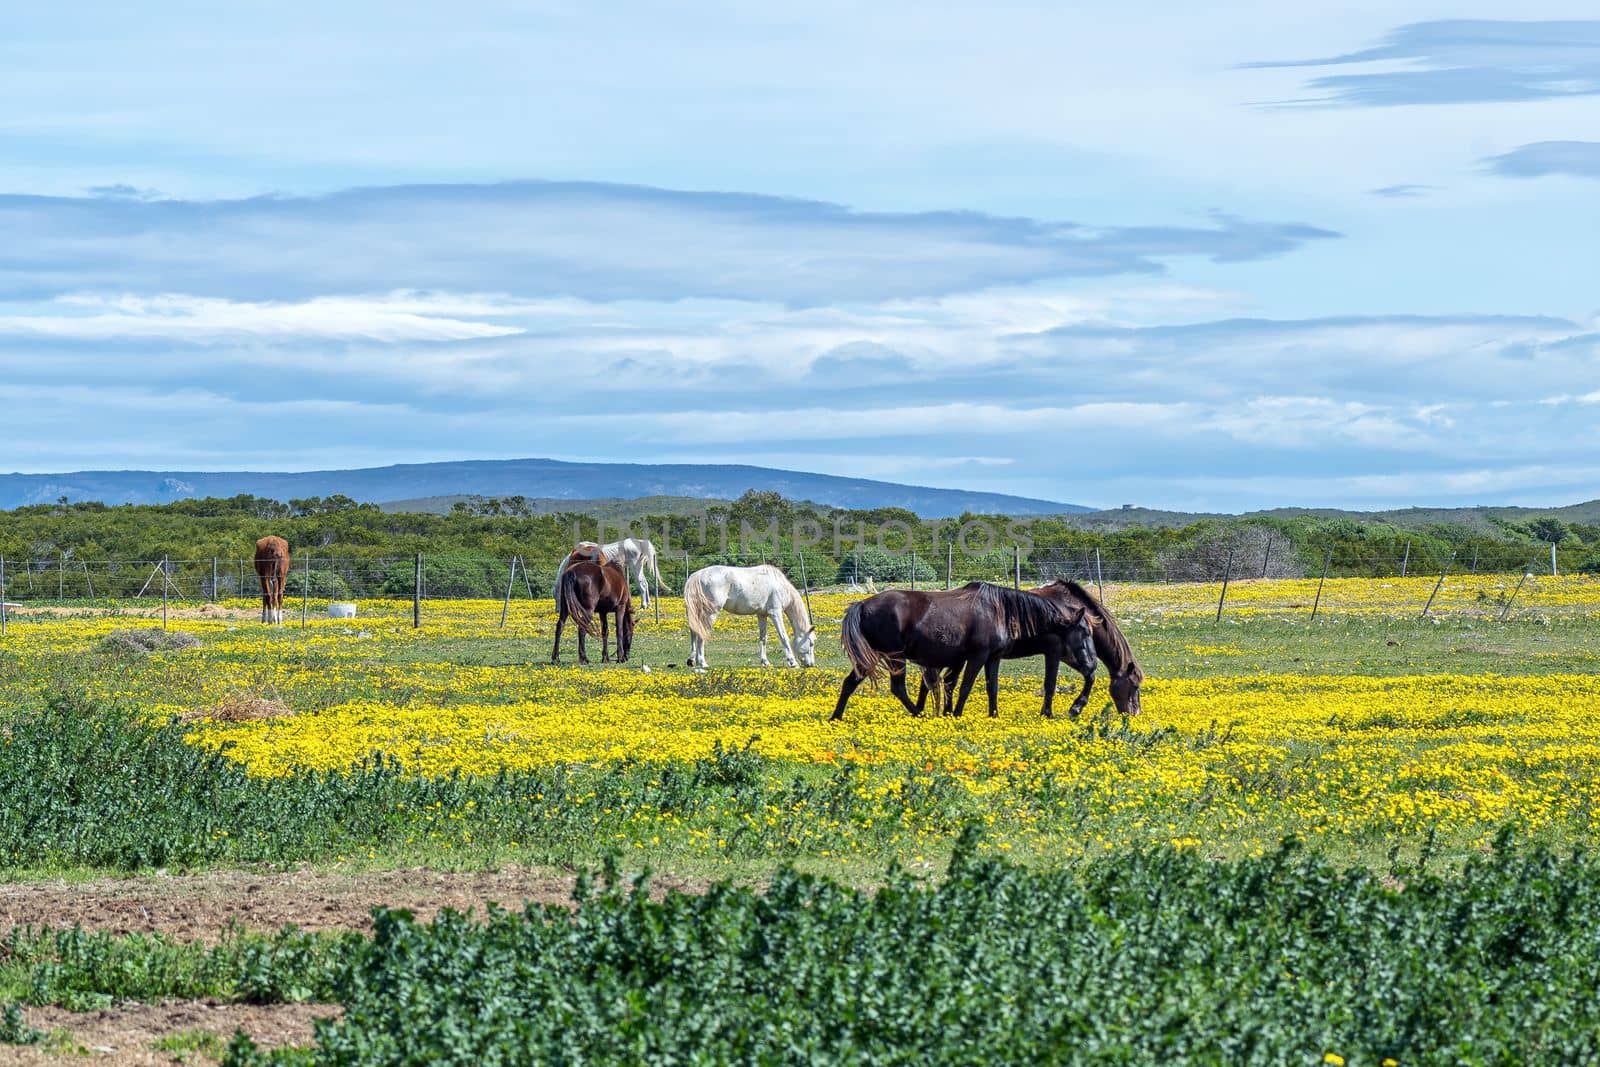 Horses grazing between wild flowers in Struisbaai in the Western Cape Province